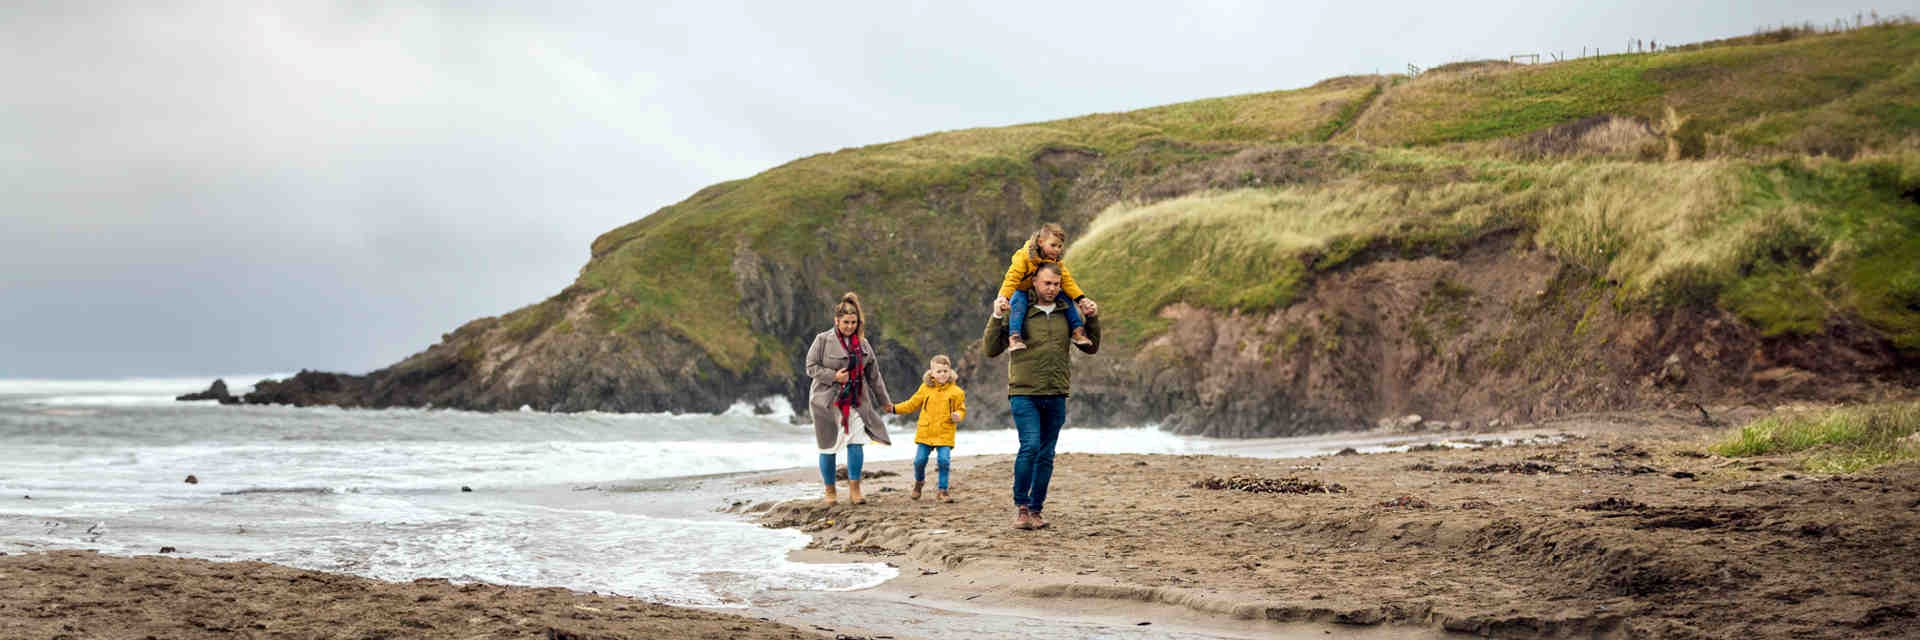 Family walking along a beach by a headland